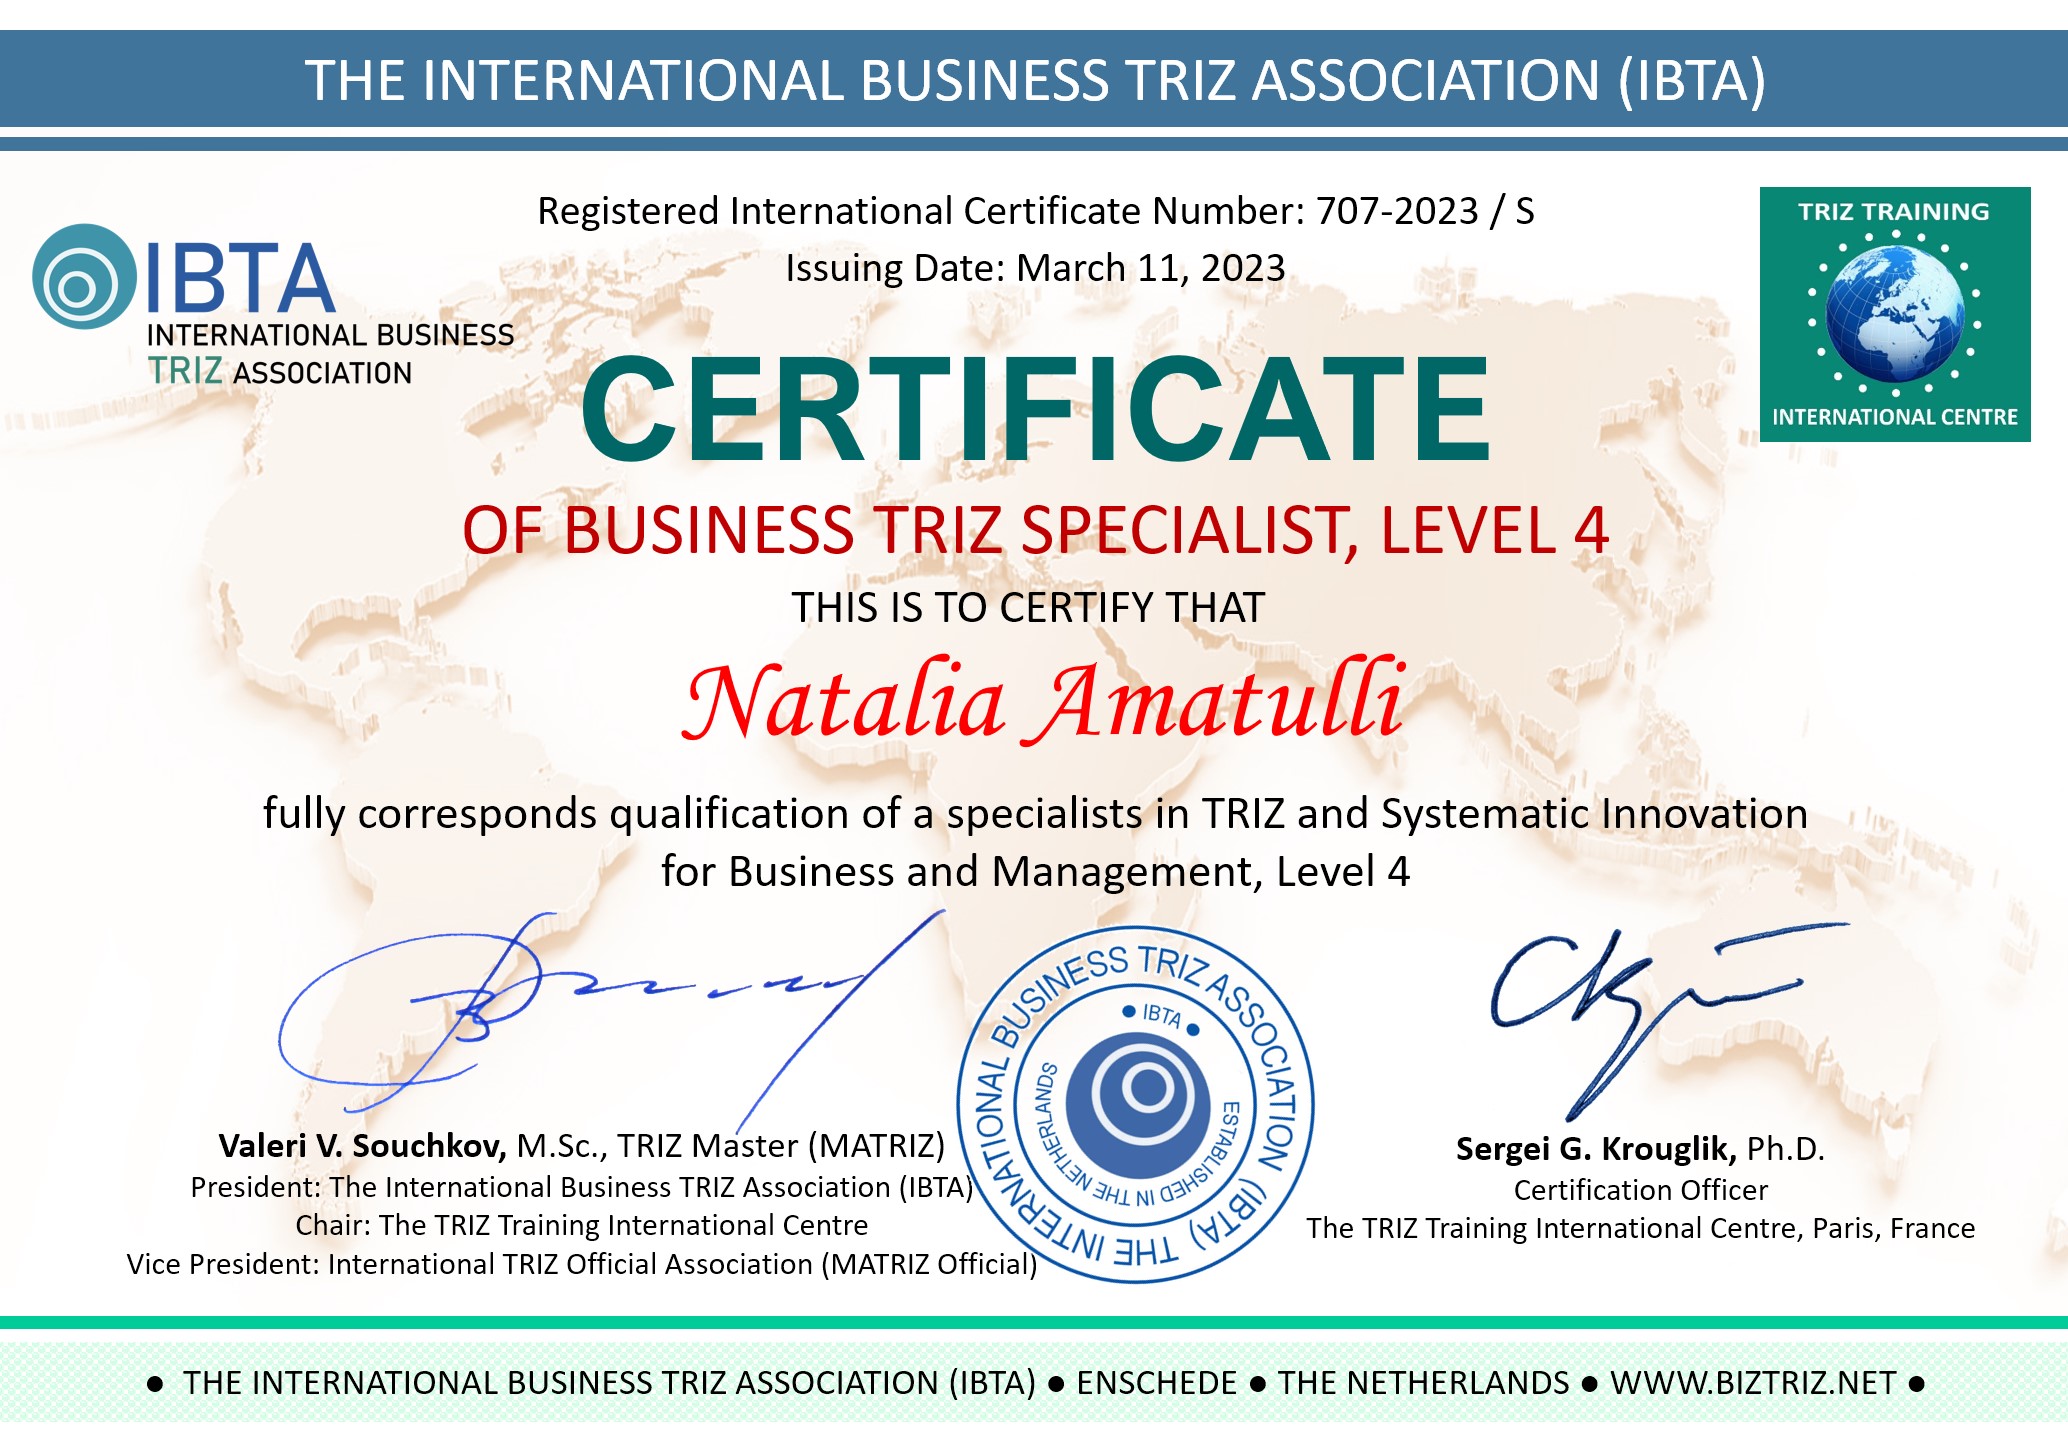 PowerPoint Slide Show IBTA Certificate 707 EN Natalia Amatulli Level 4.pptx 11 06 2023 12 15 01